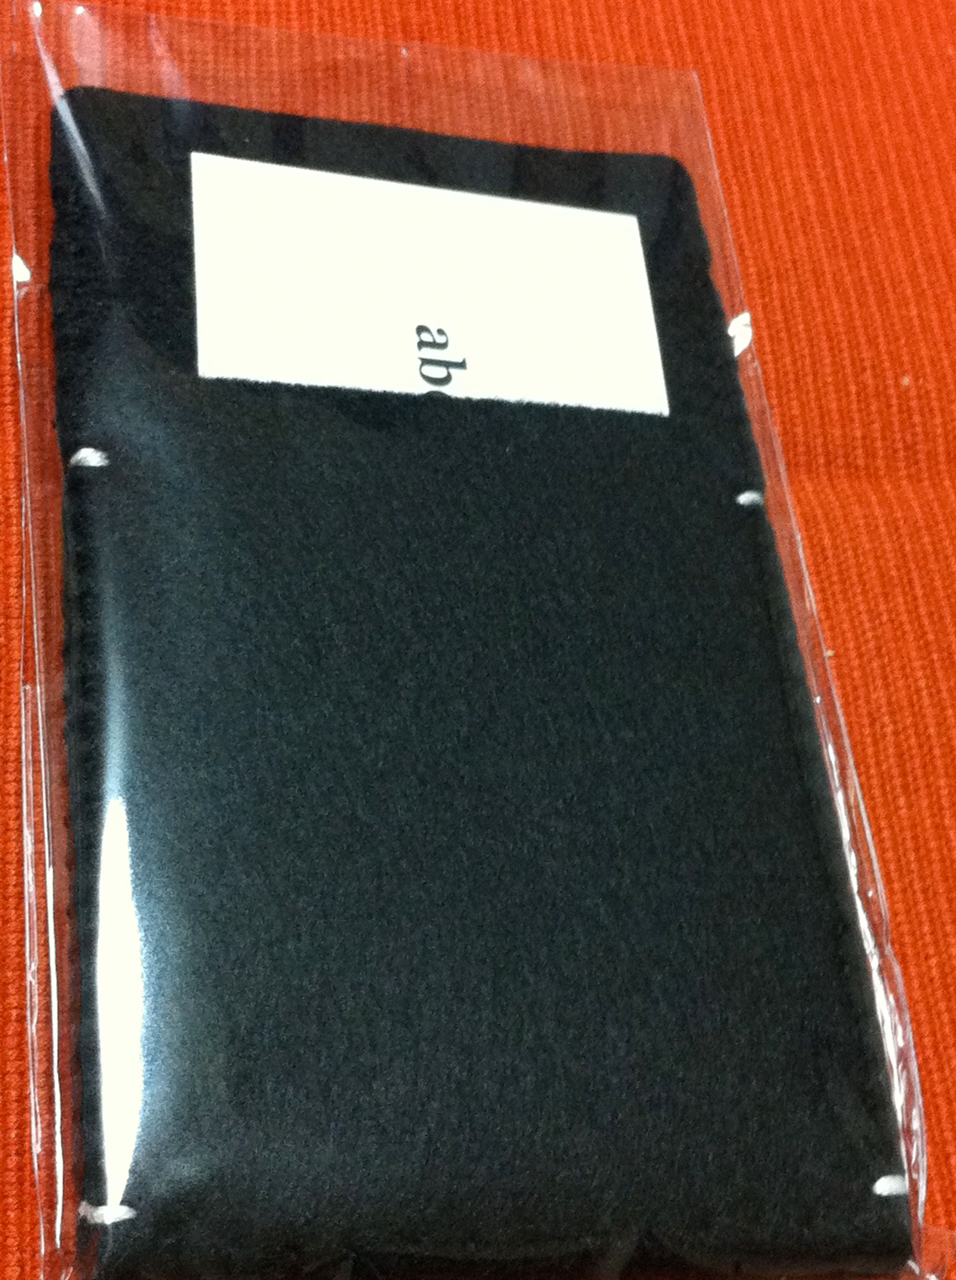 abi’s iPhone 日記の、アビさん作の iPhone 4 + Bumper用のフエルトケース